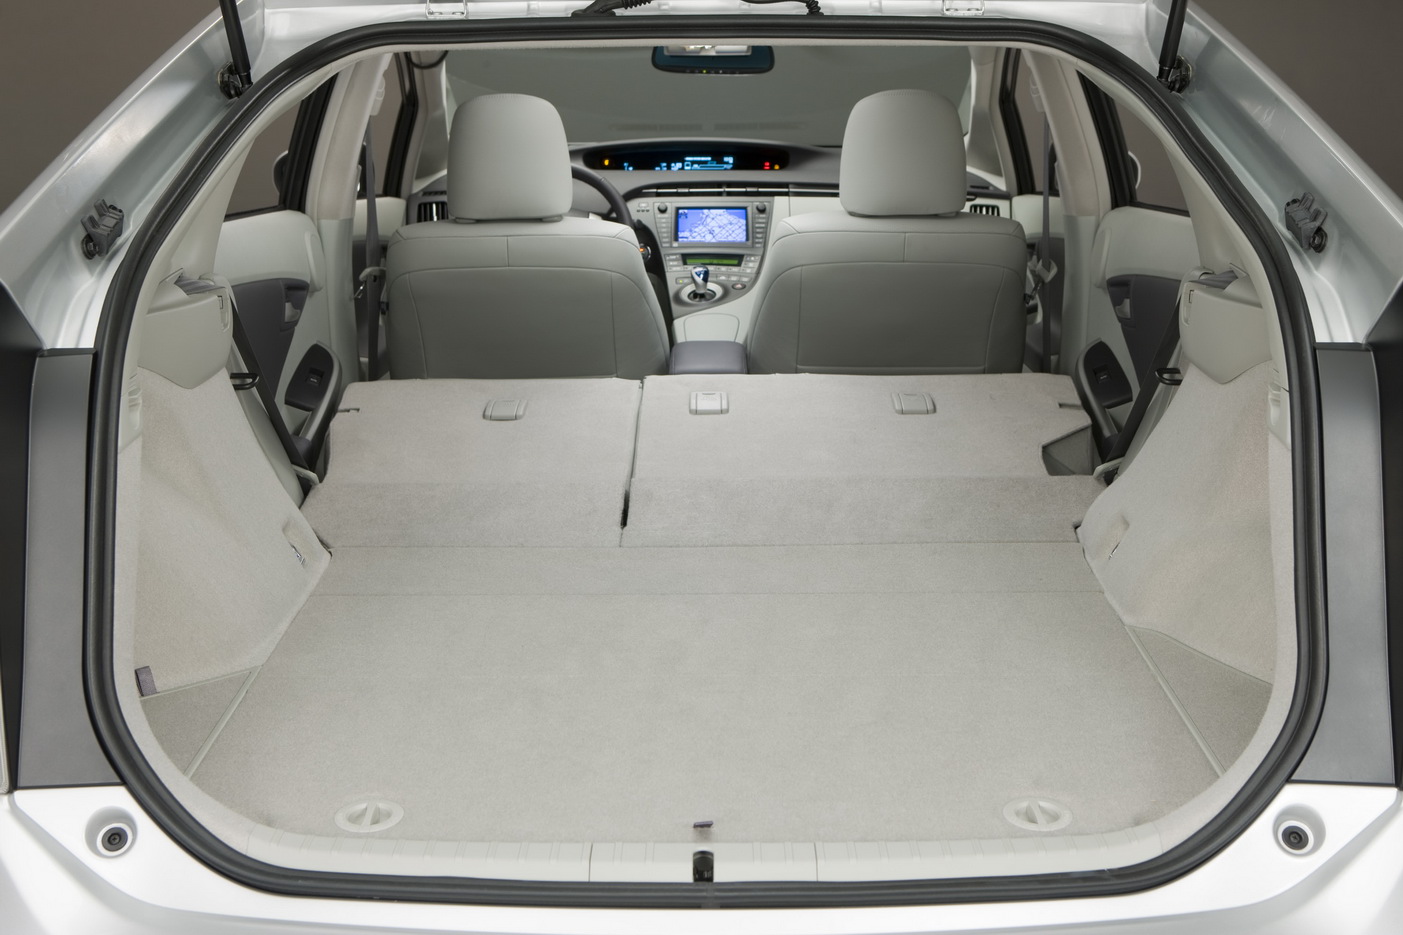 Toyota Prius 3rd Generation Interior Boot/Trunk